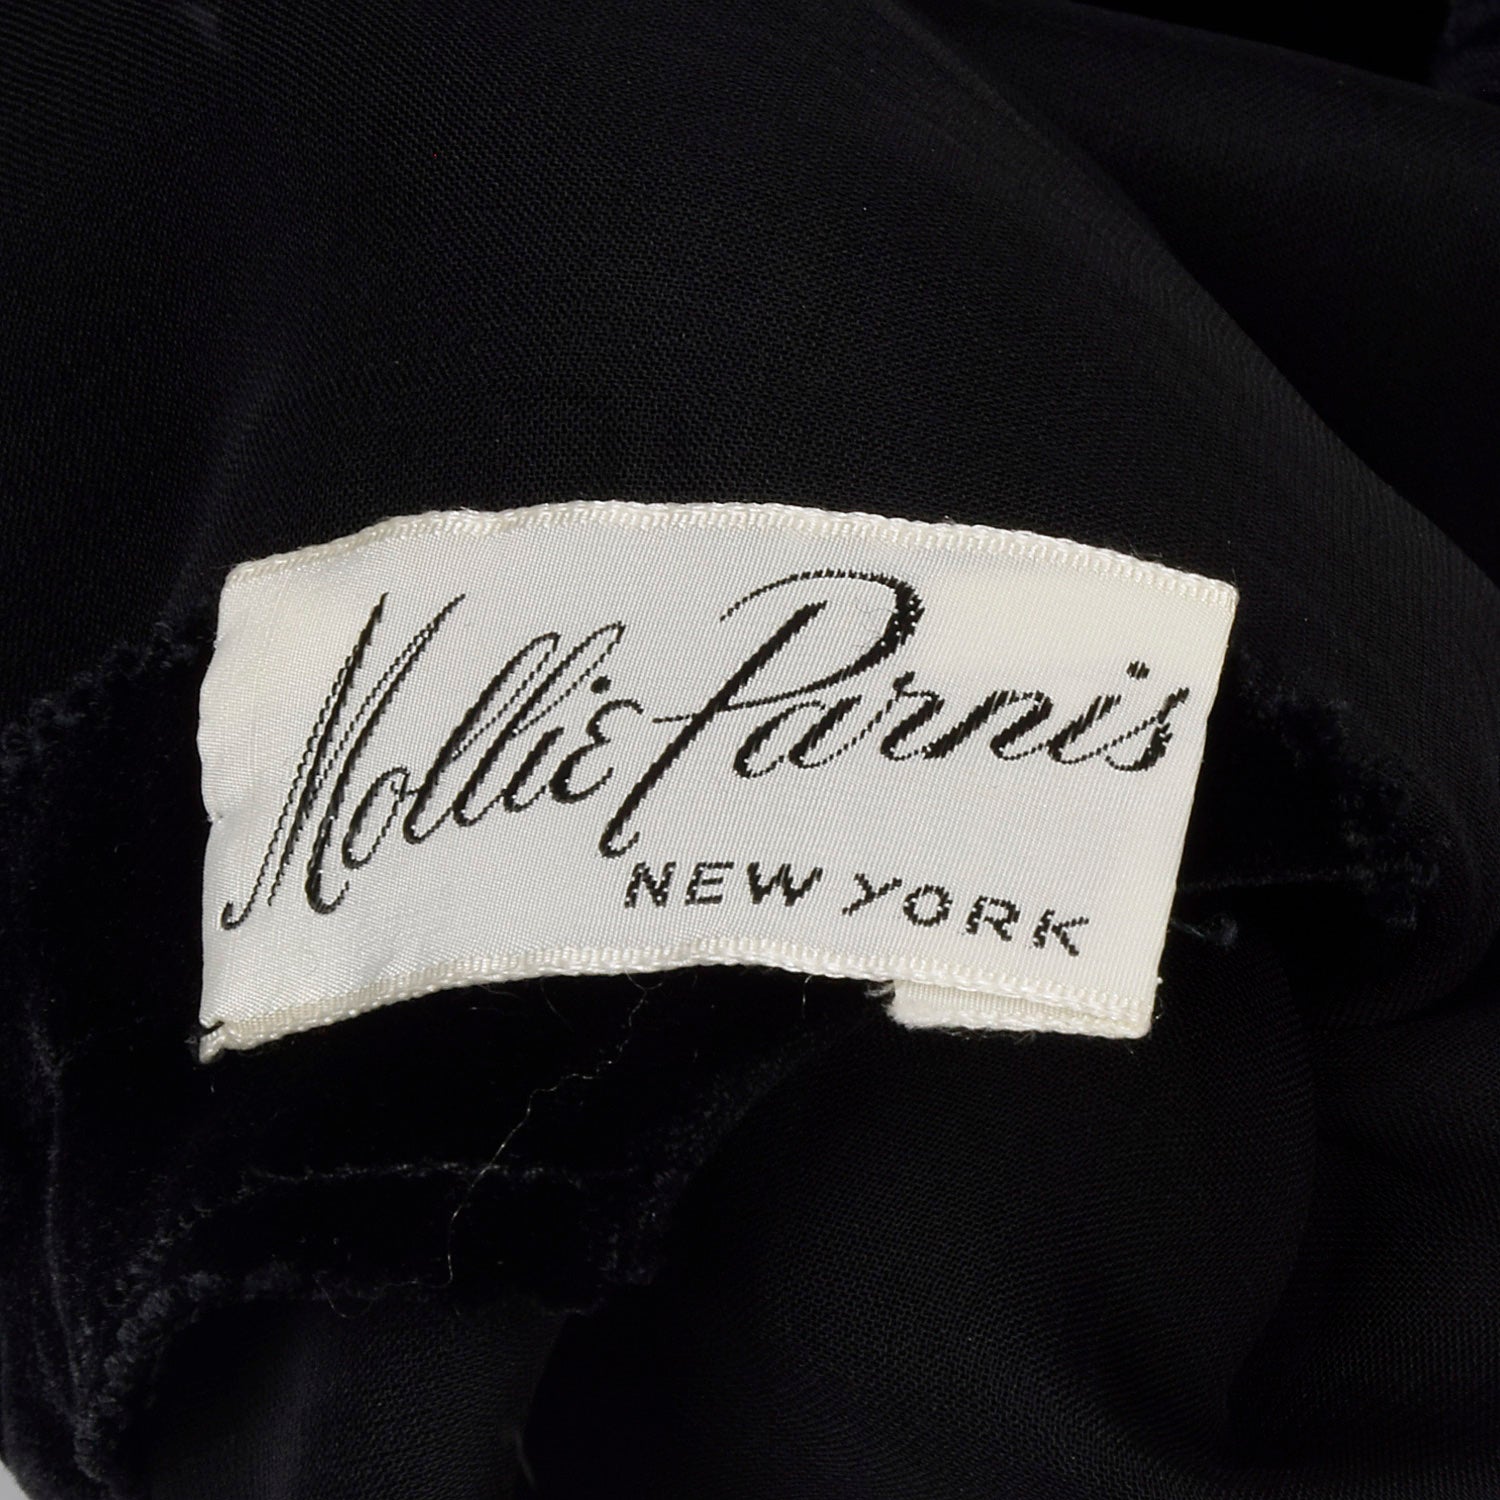 1950s Medium Mollie Parnis Dress Black Velvet Evening Gown Silk Satin Long Sleeve